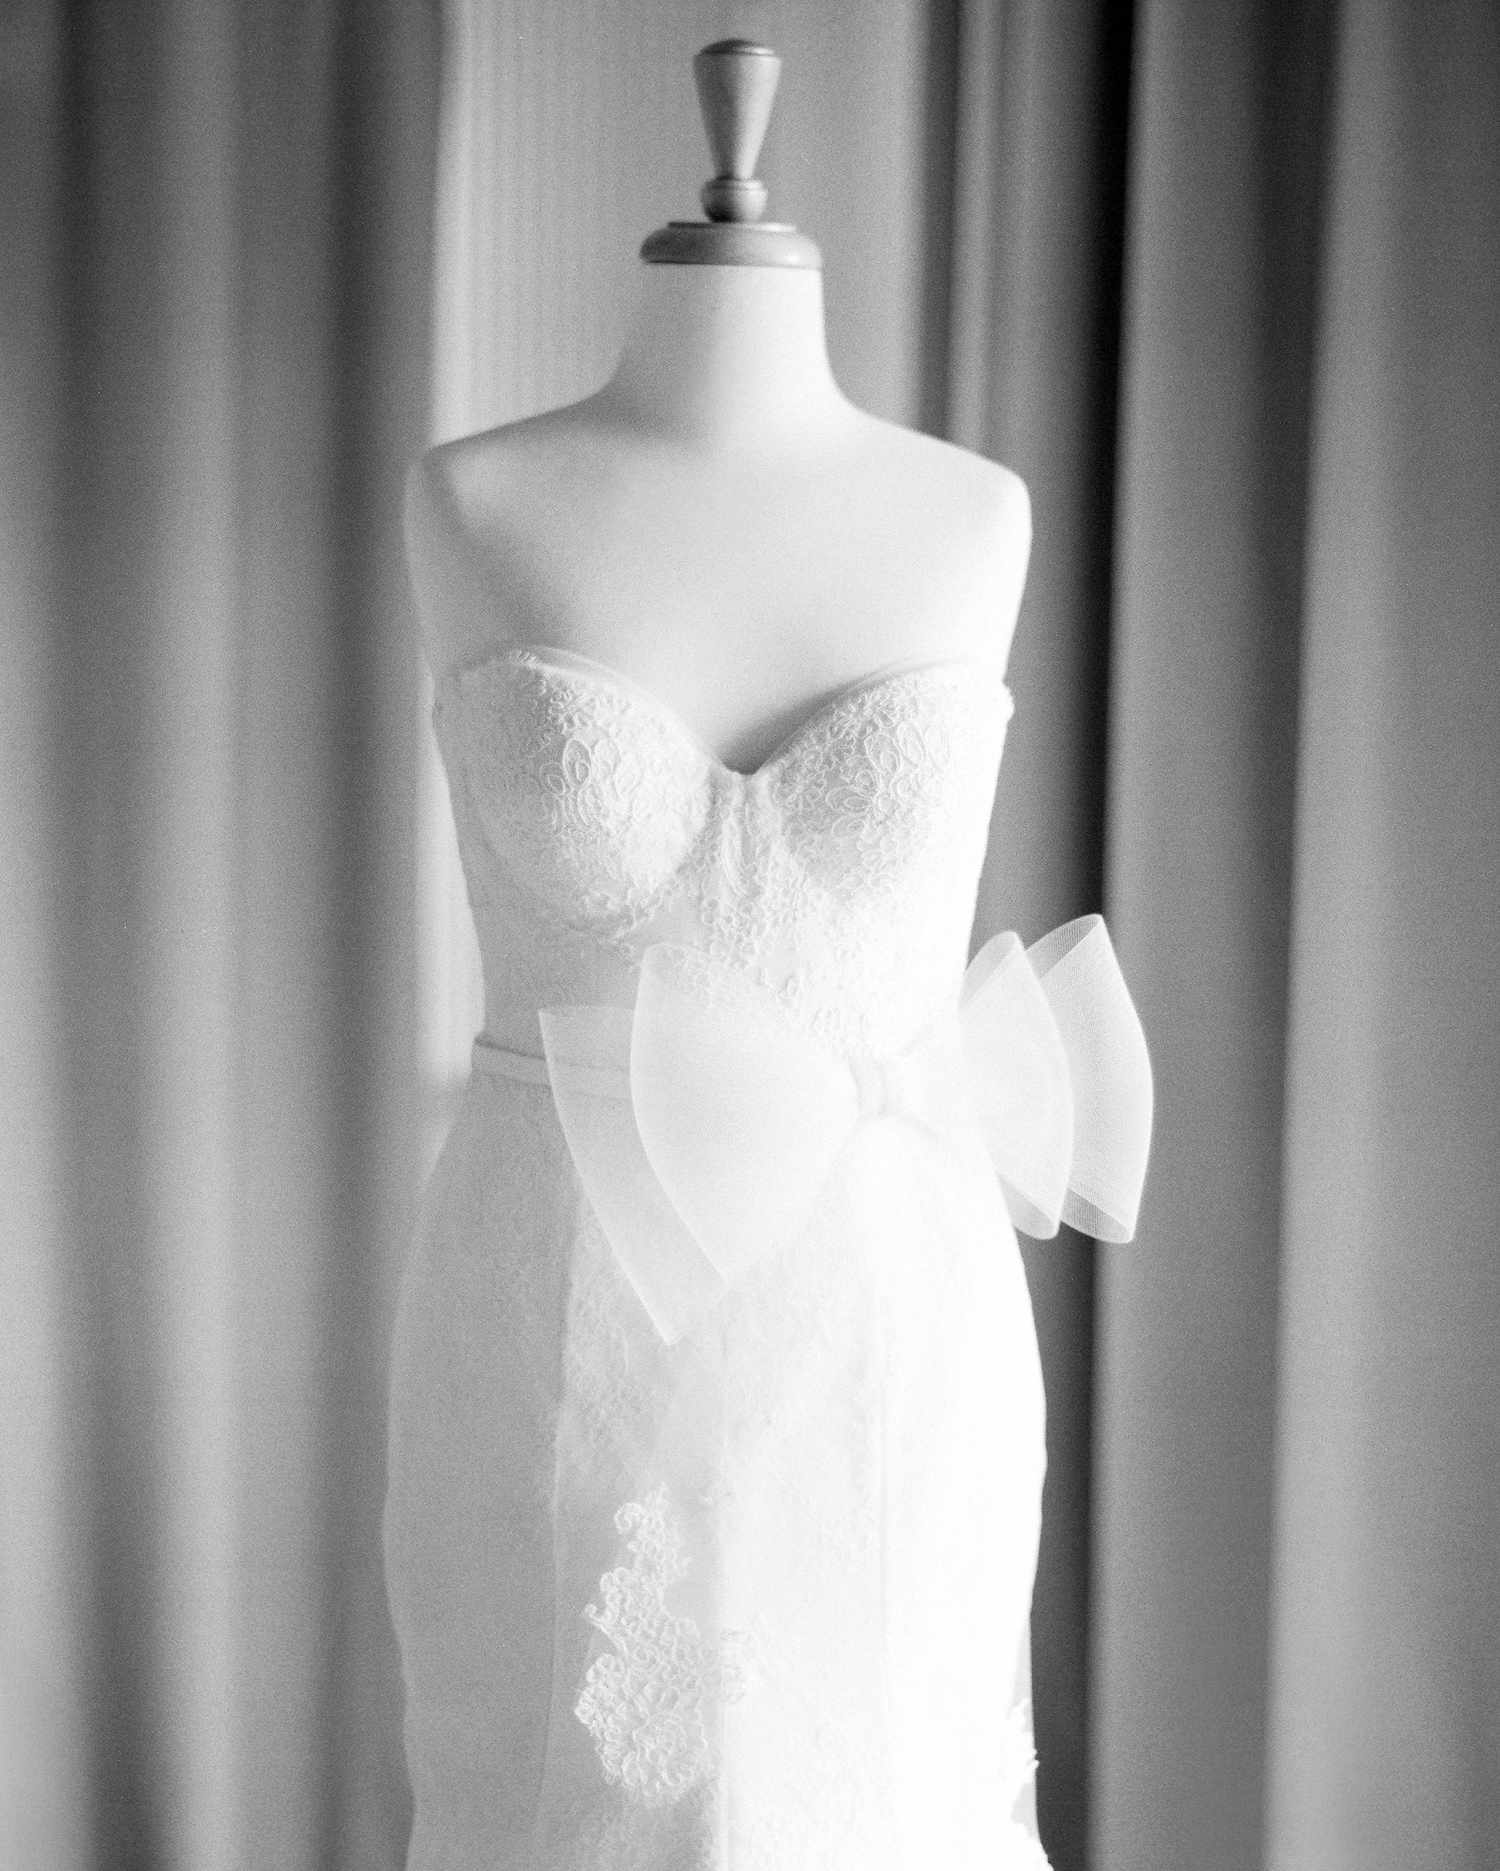 jemma-michael-wedding-dress-26990005-s112110-0815.jpg